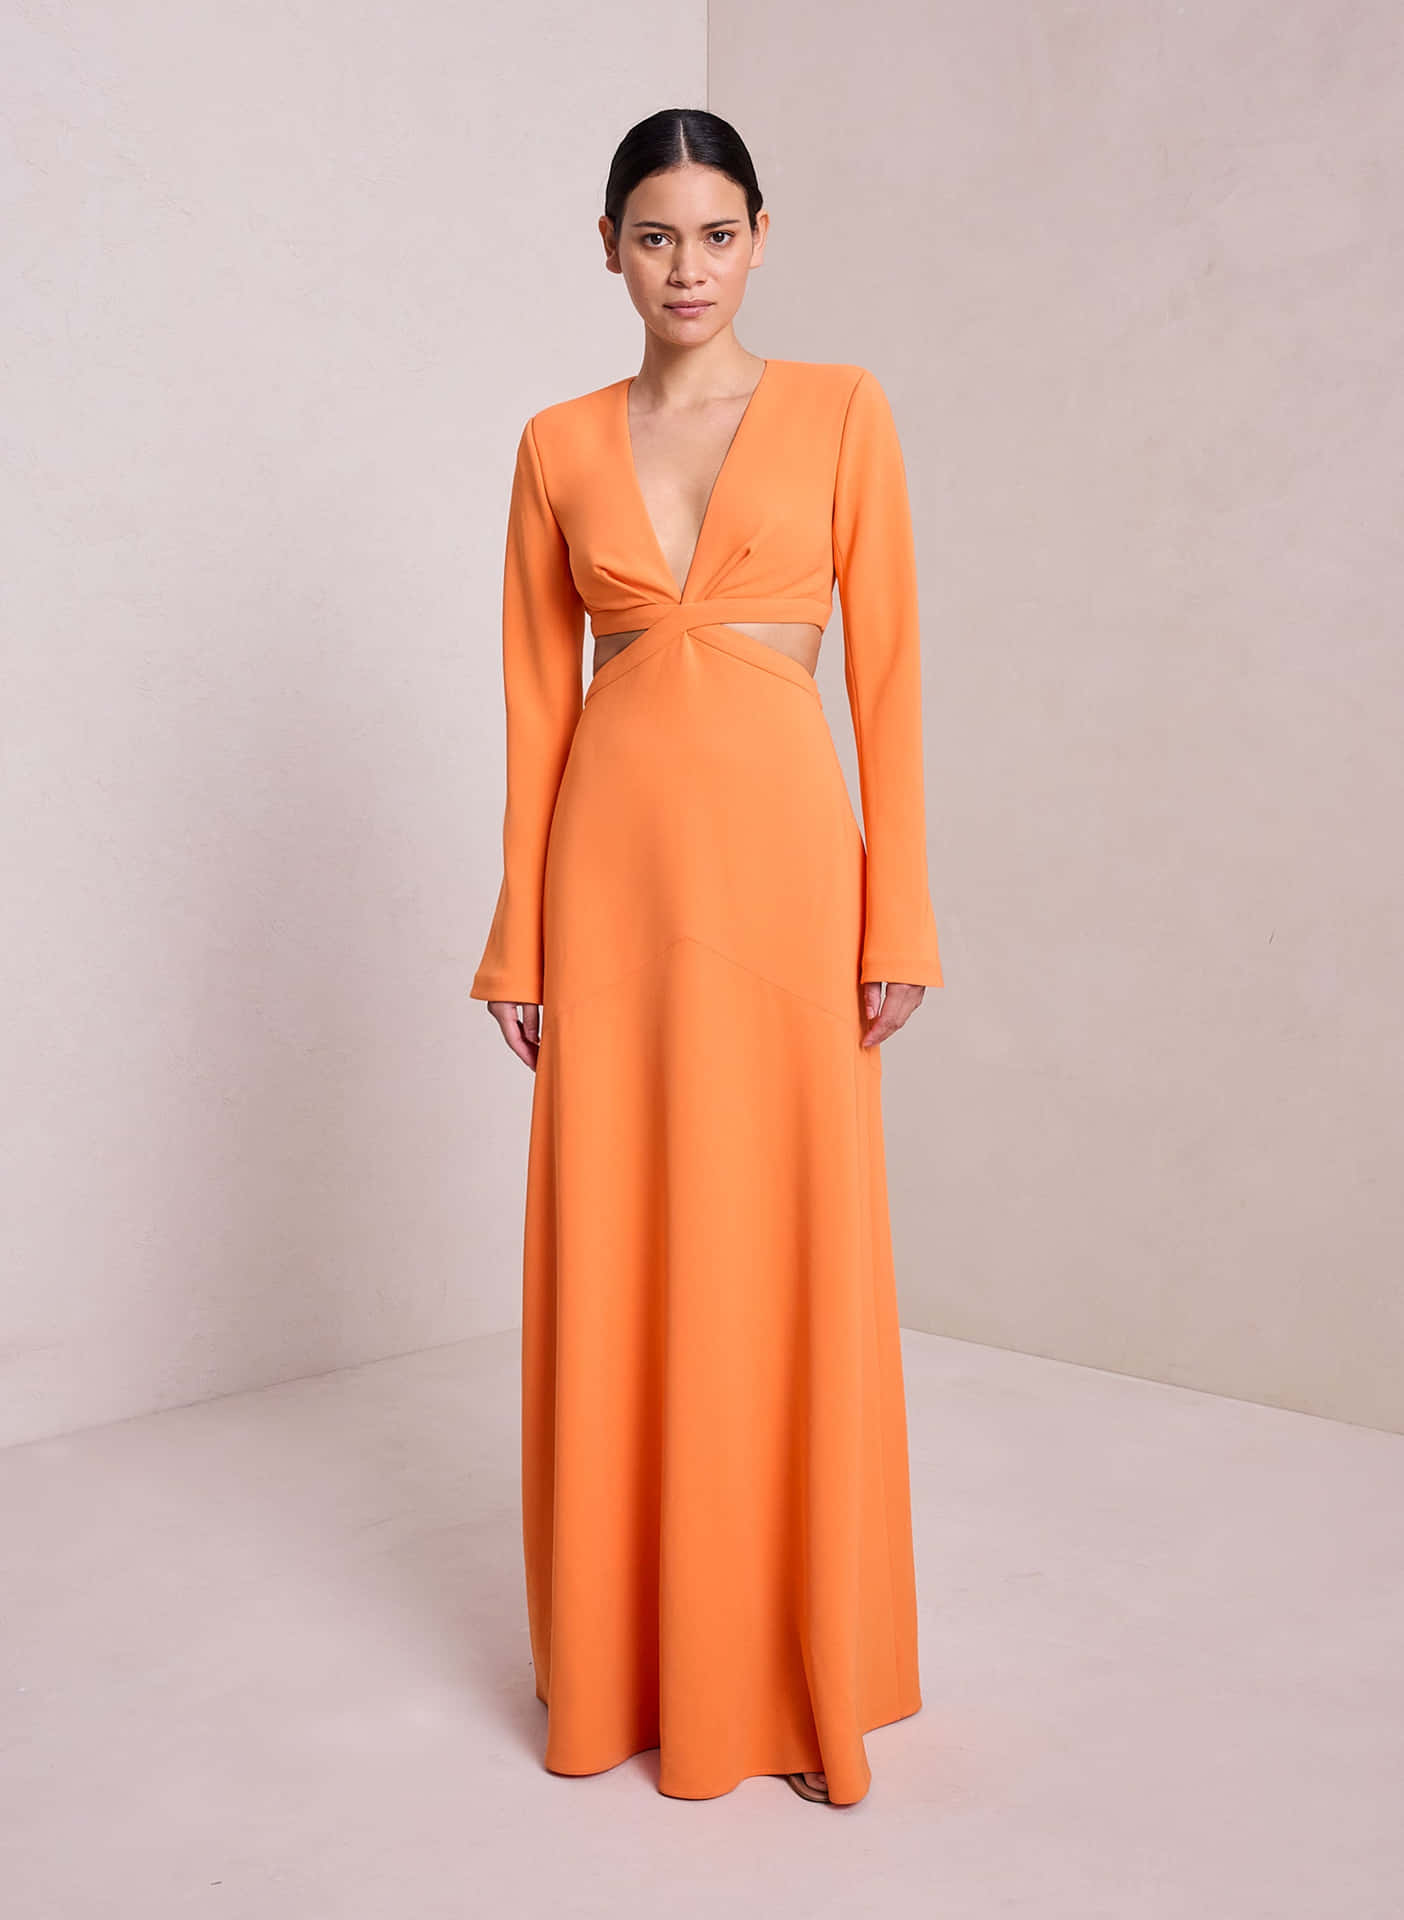 Model In An Orange Butterfly Sleeved Long Dress Picture